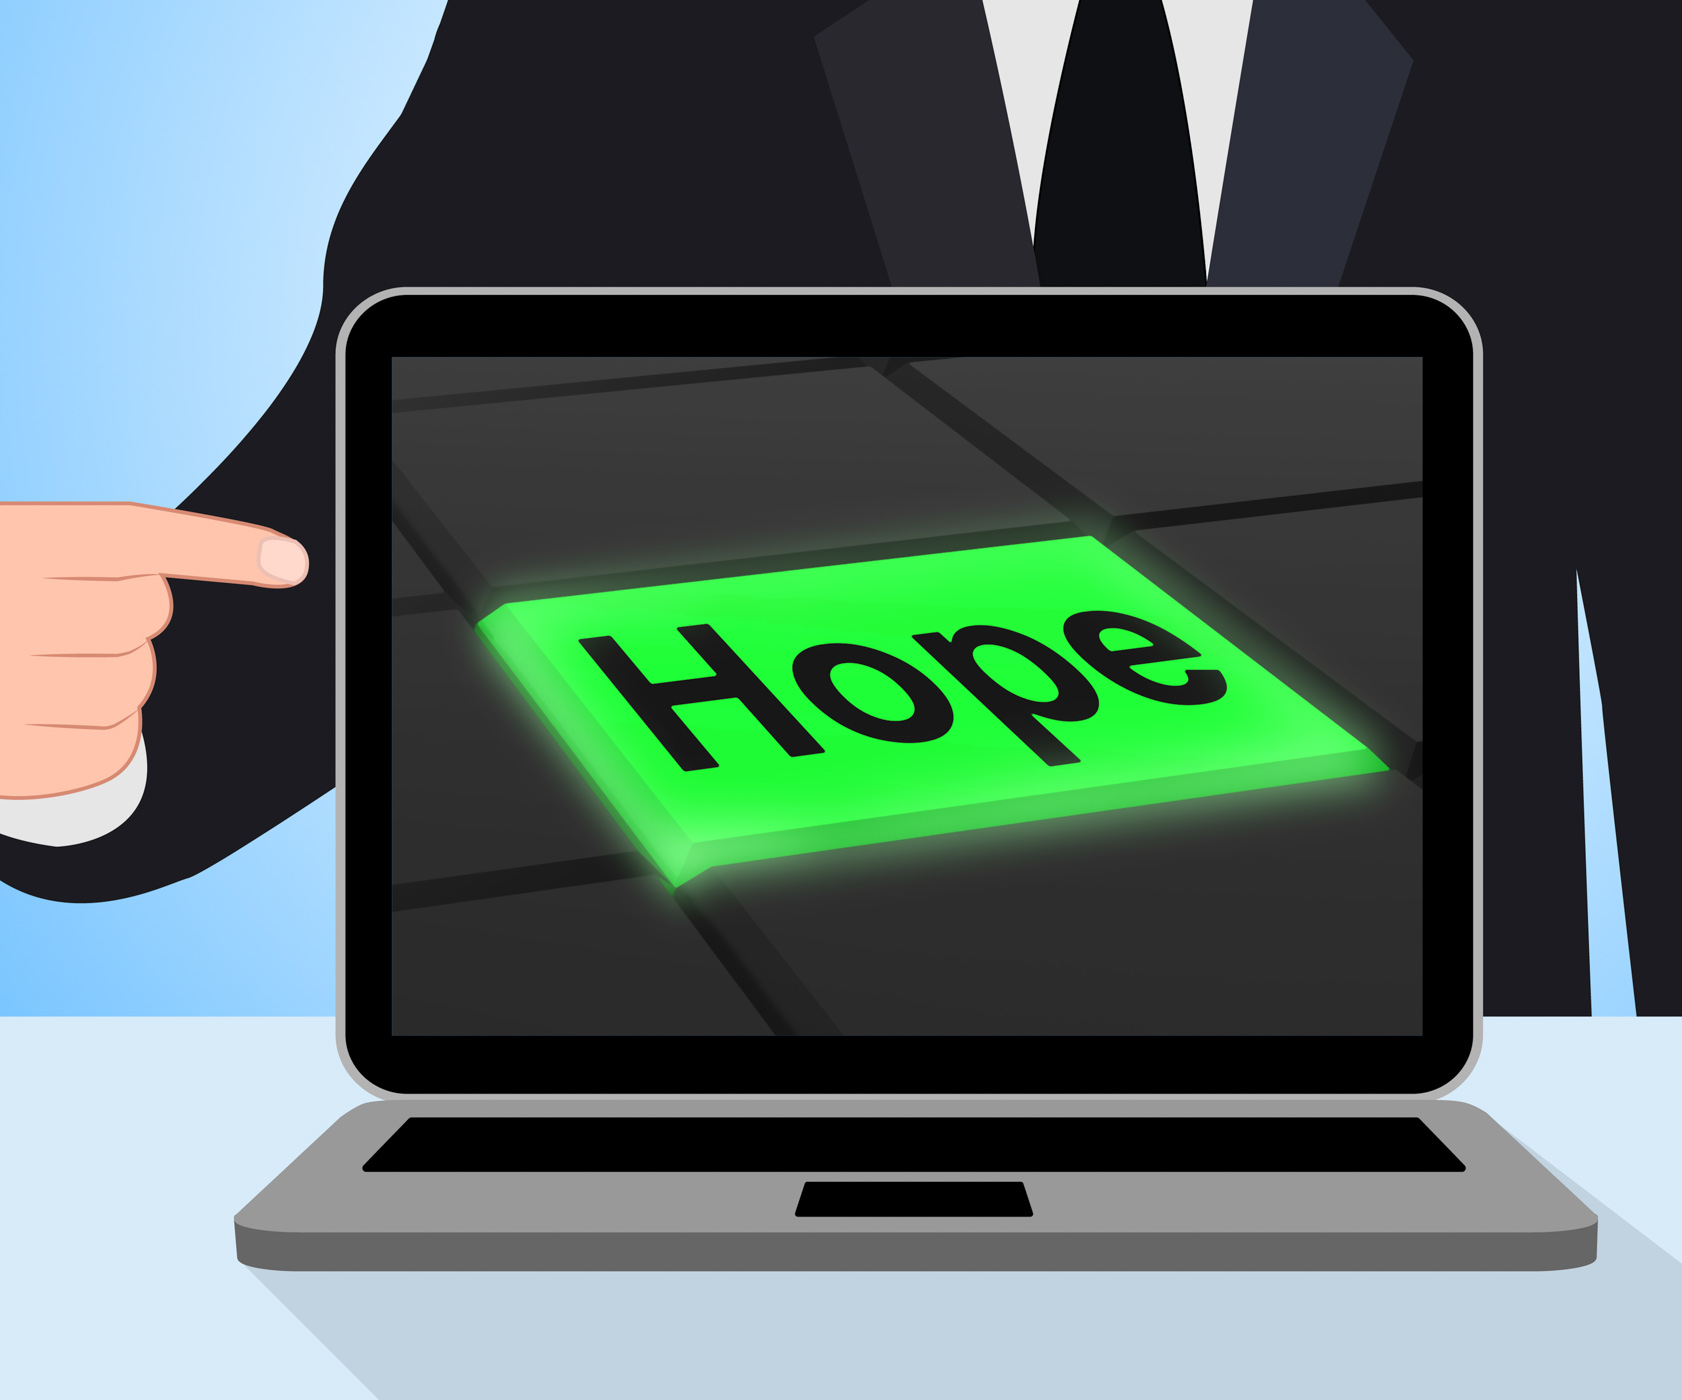 Hope button displays hoping hopeful wishing or wishful photo